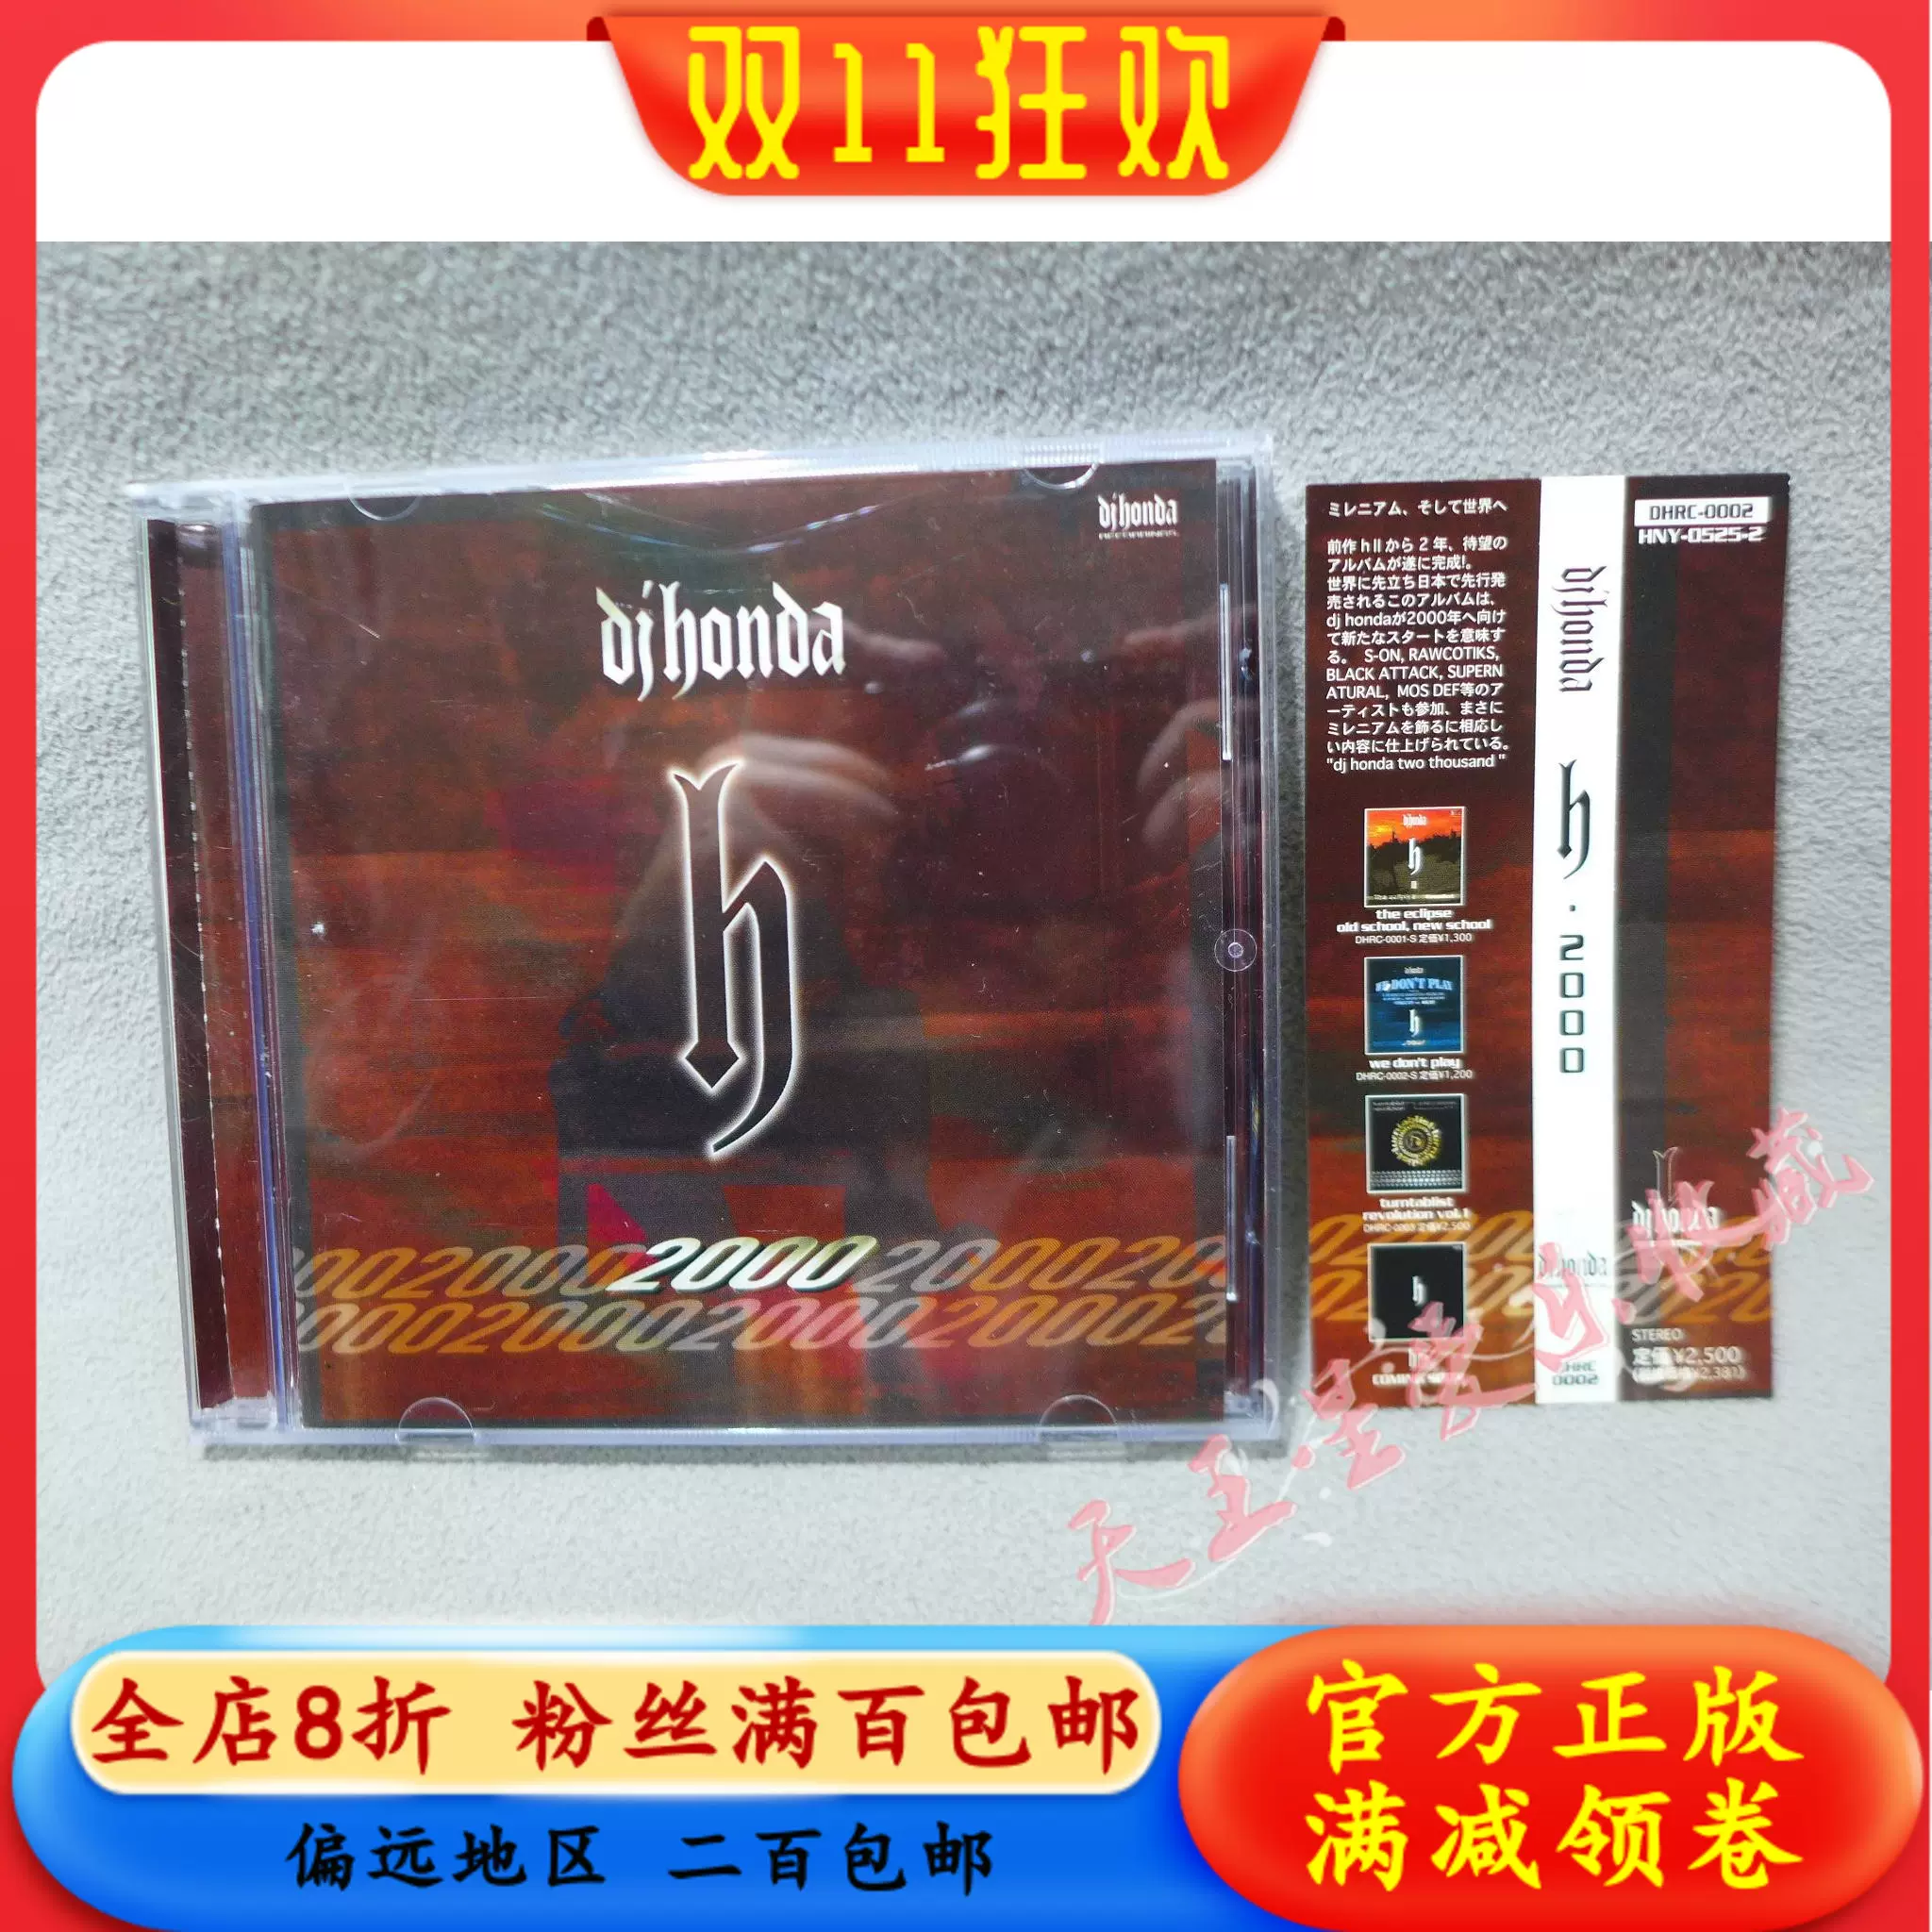 R正版CD 硬核地下说唱男歌手DJ Honda 本田胜裕H 2000 带侧标-Taobao